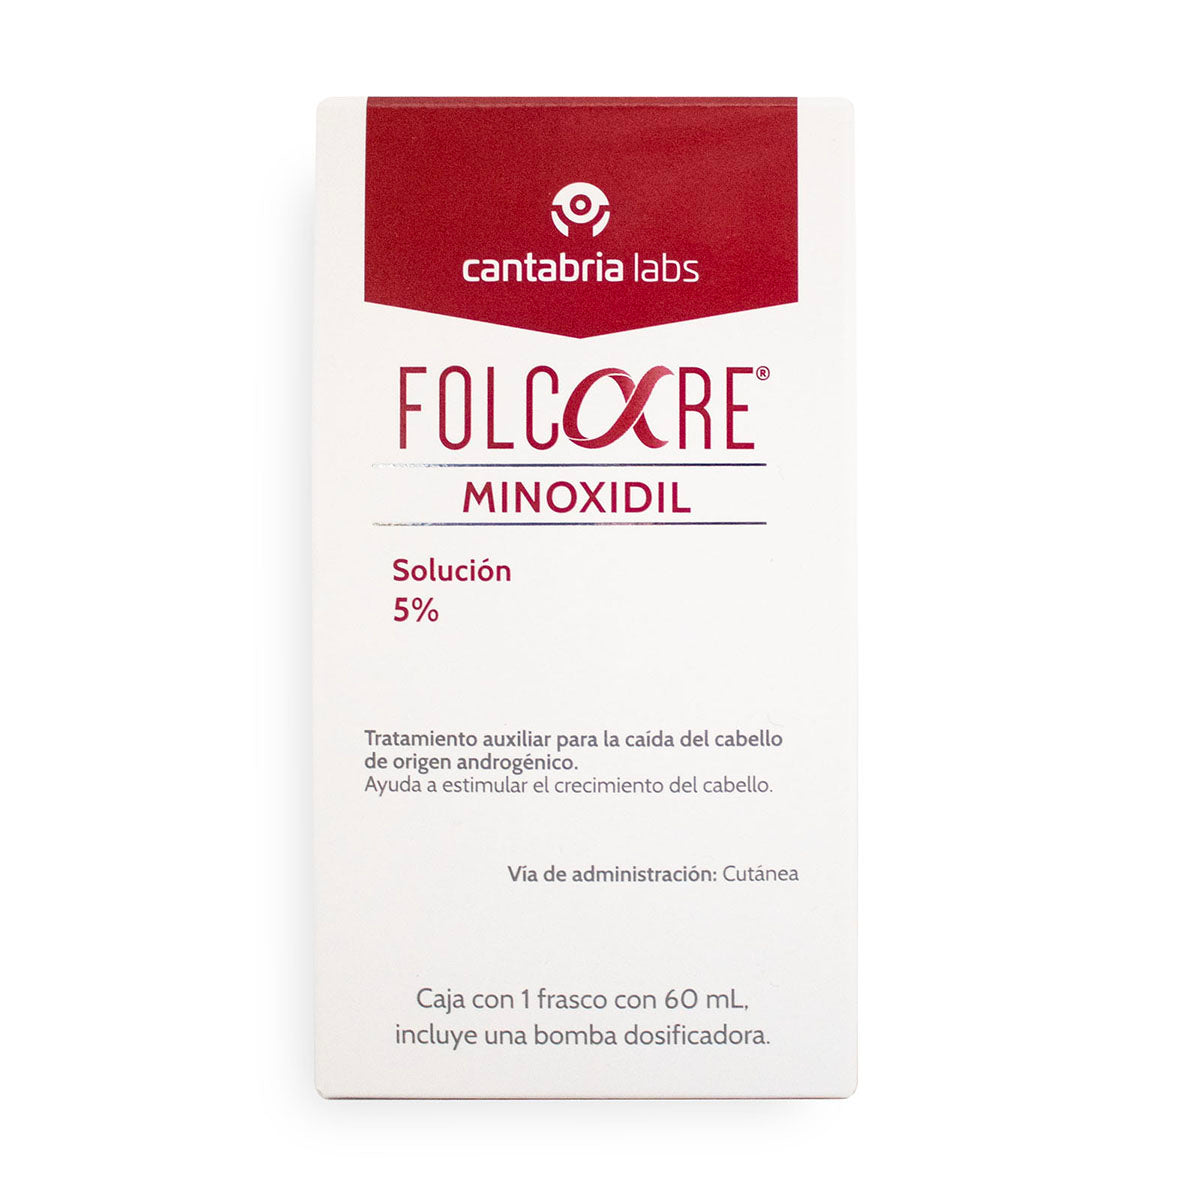 Cantabria Labs Folcare minoxidil solución 5% 60ml.